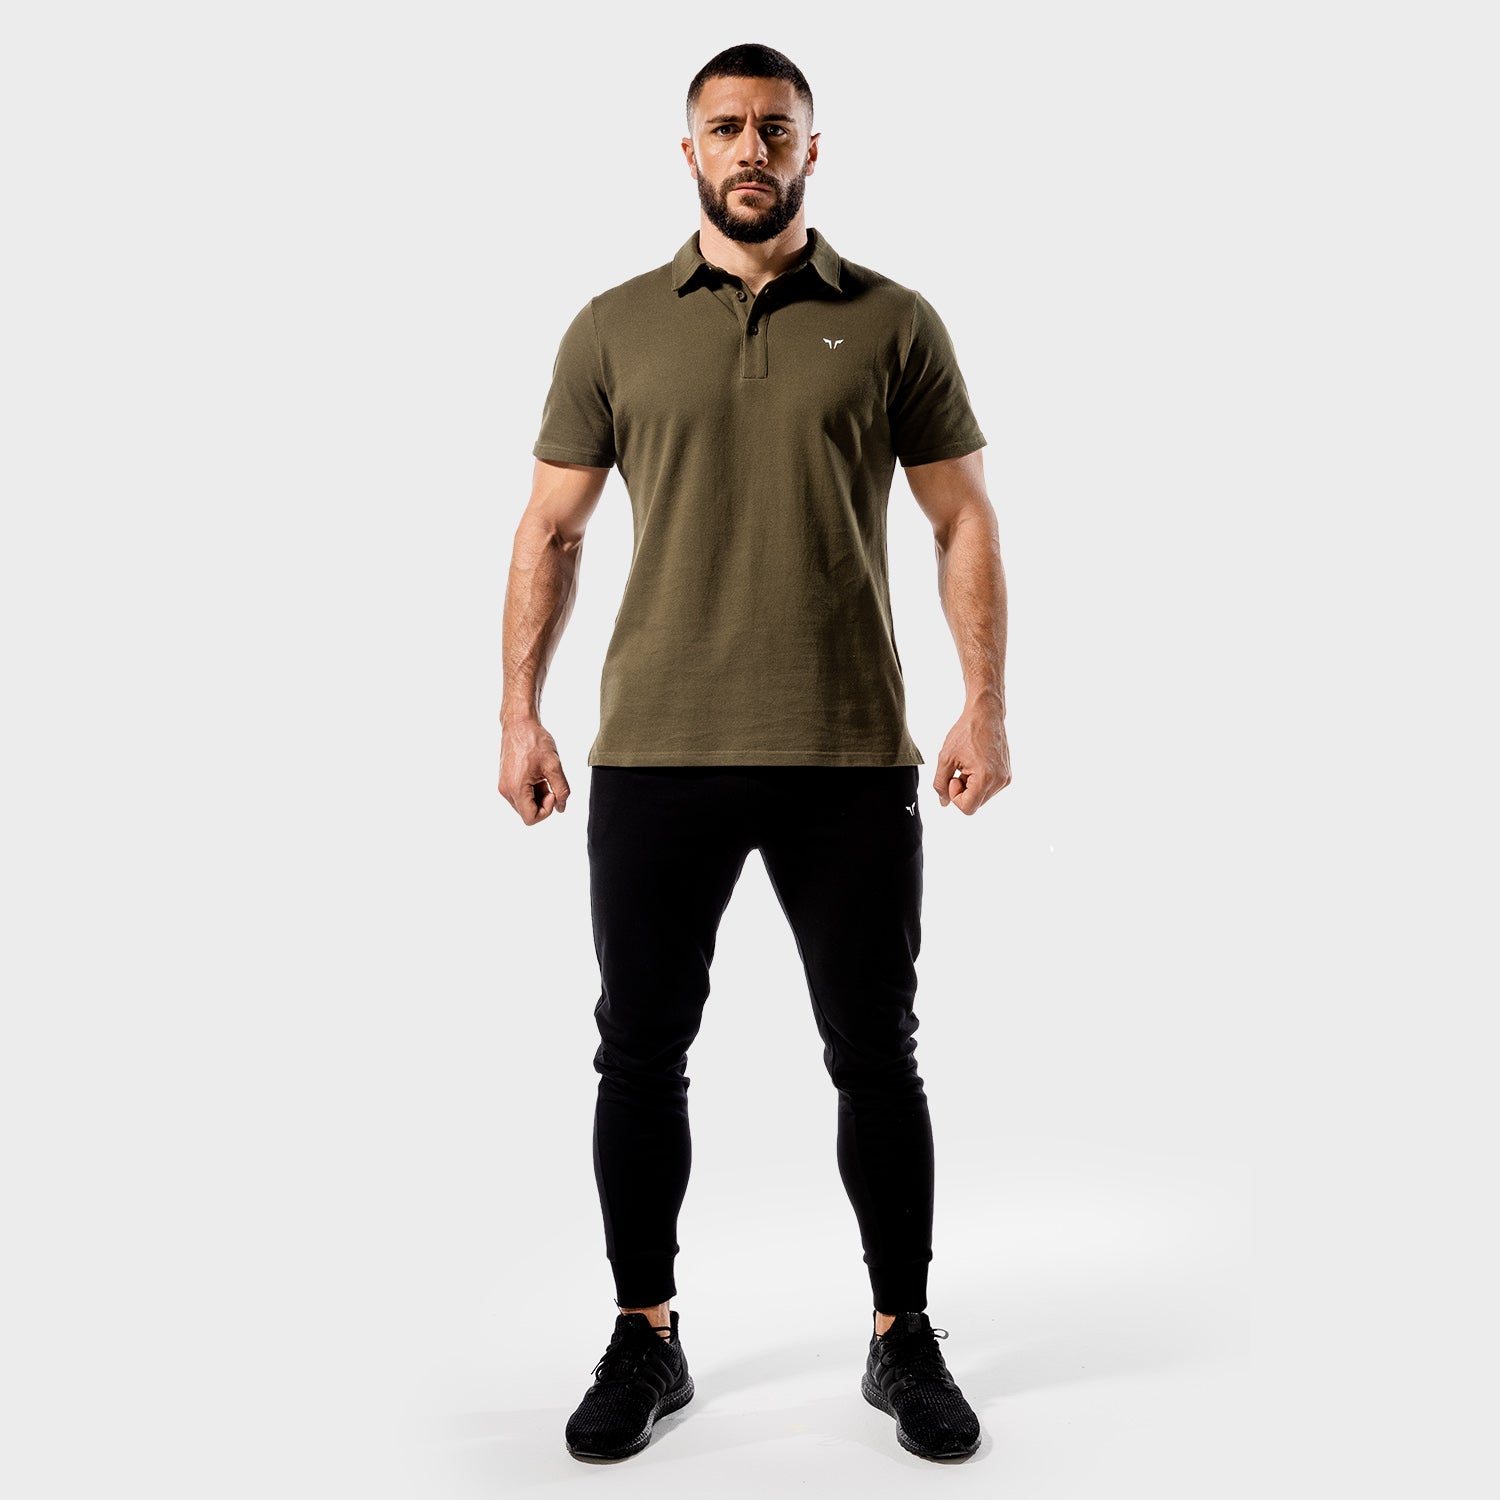 squatwolf-gym-wear-core-tee-polo-khaki-workout-shirts-for-men